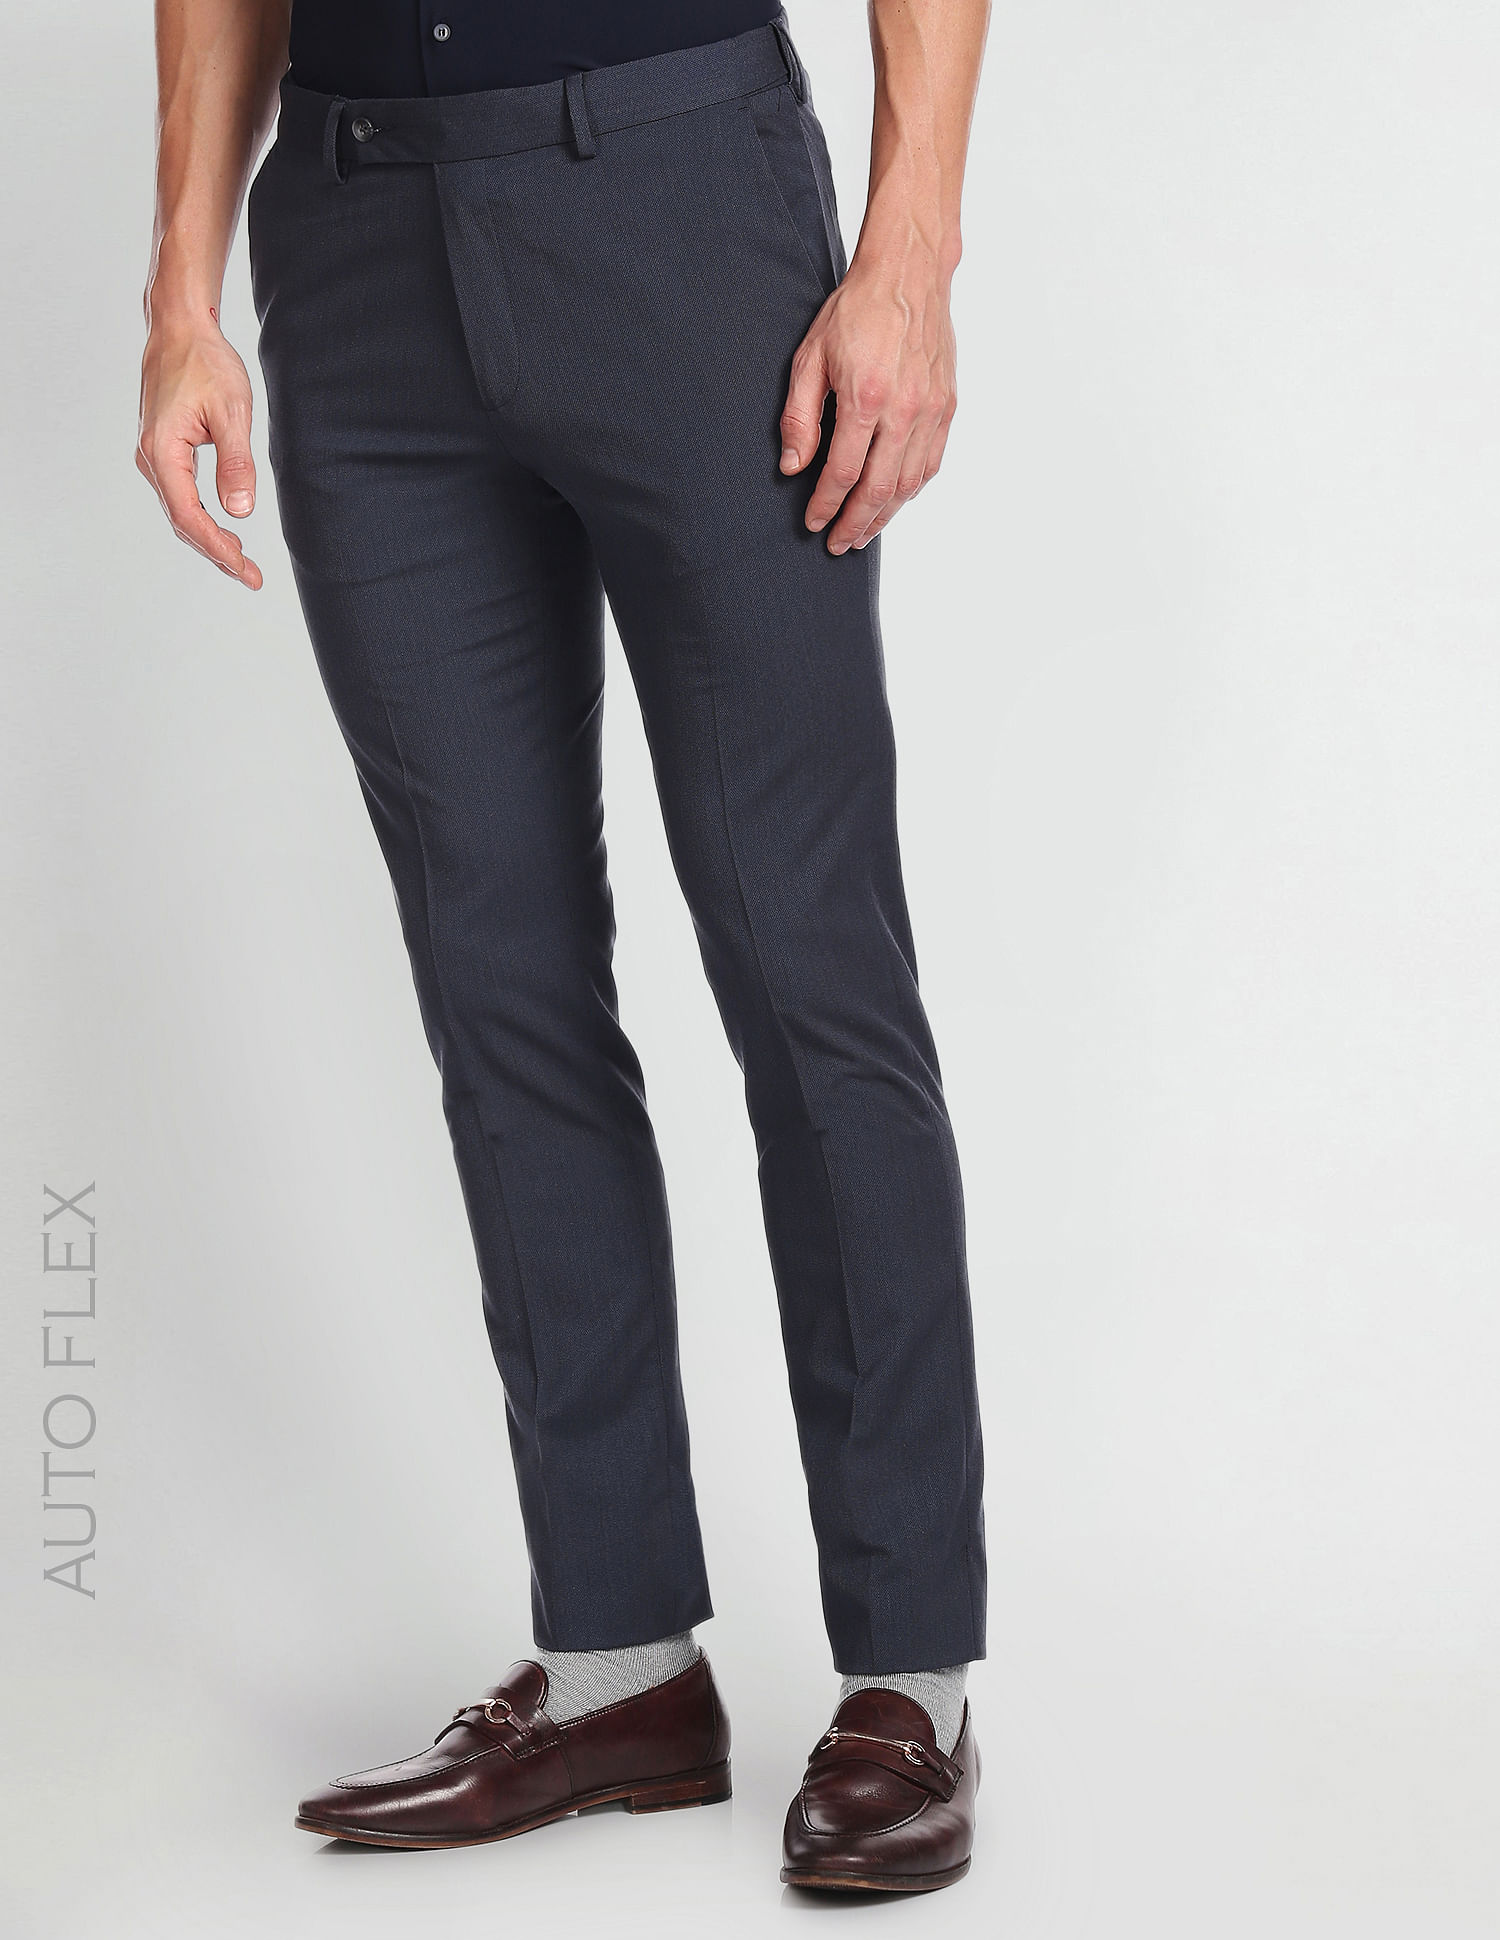 Buy Light Grey Trousers & Pants for Men by ARROW Online | Ajio.com-demhanvico.com.vn